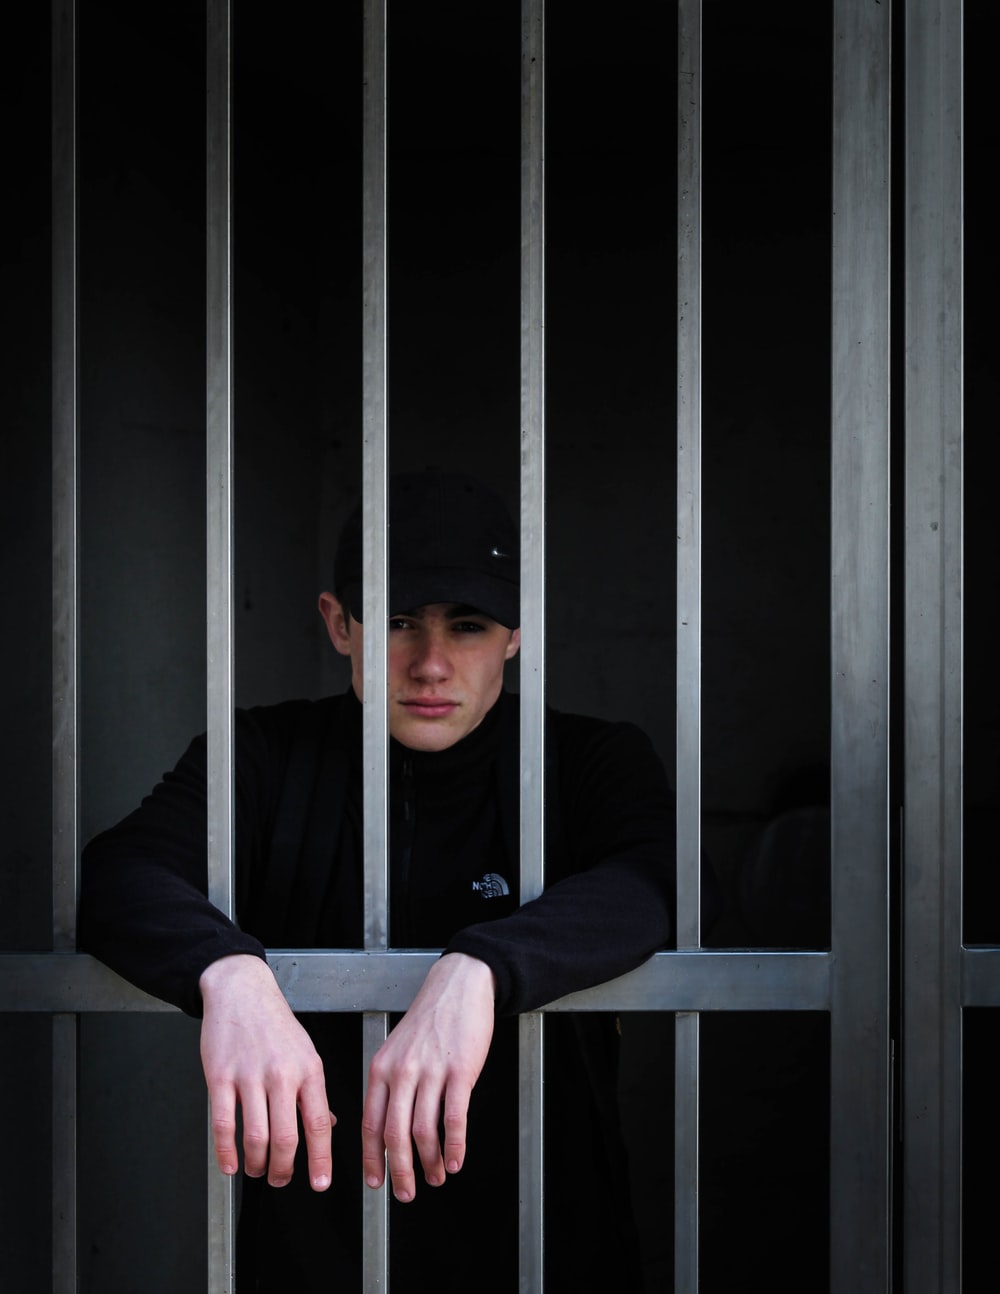 Prison Bars Picture. Download Free Image